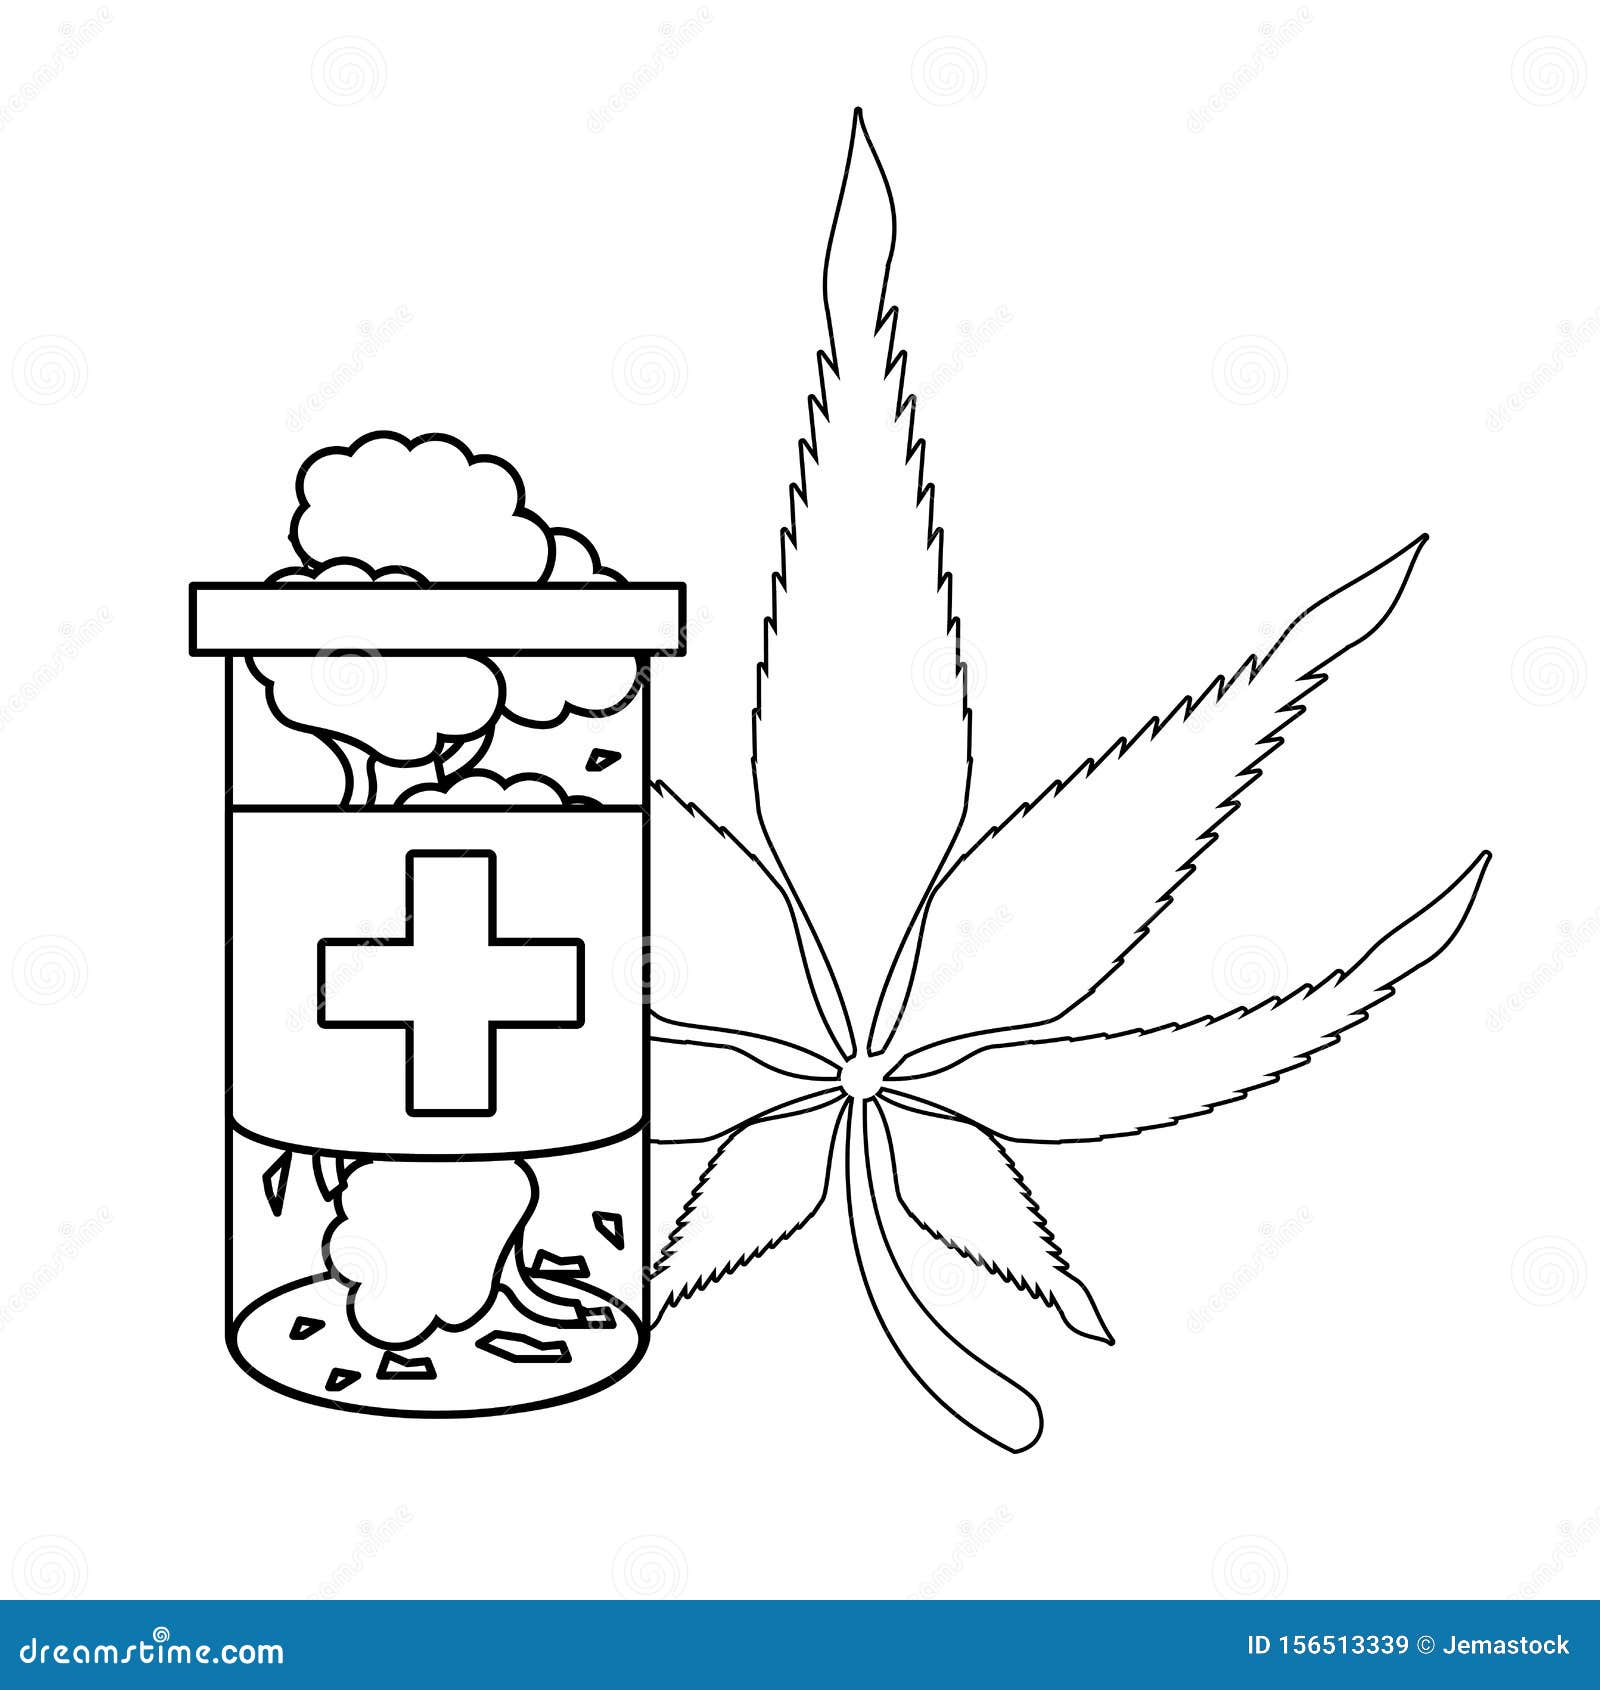 Cannabis Martihuana Sativa Hemp Cartoon in Black and White Stock Vector ...